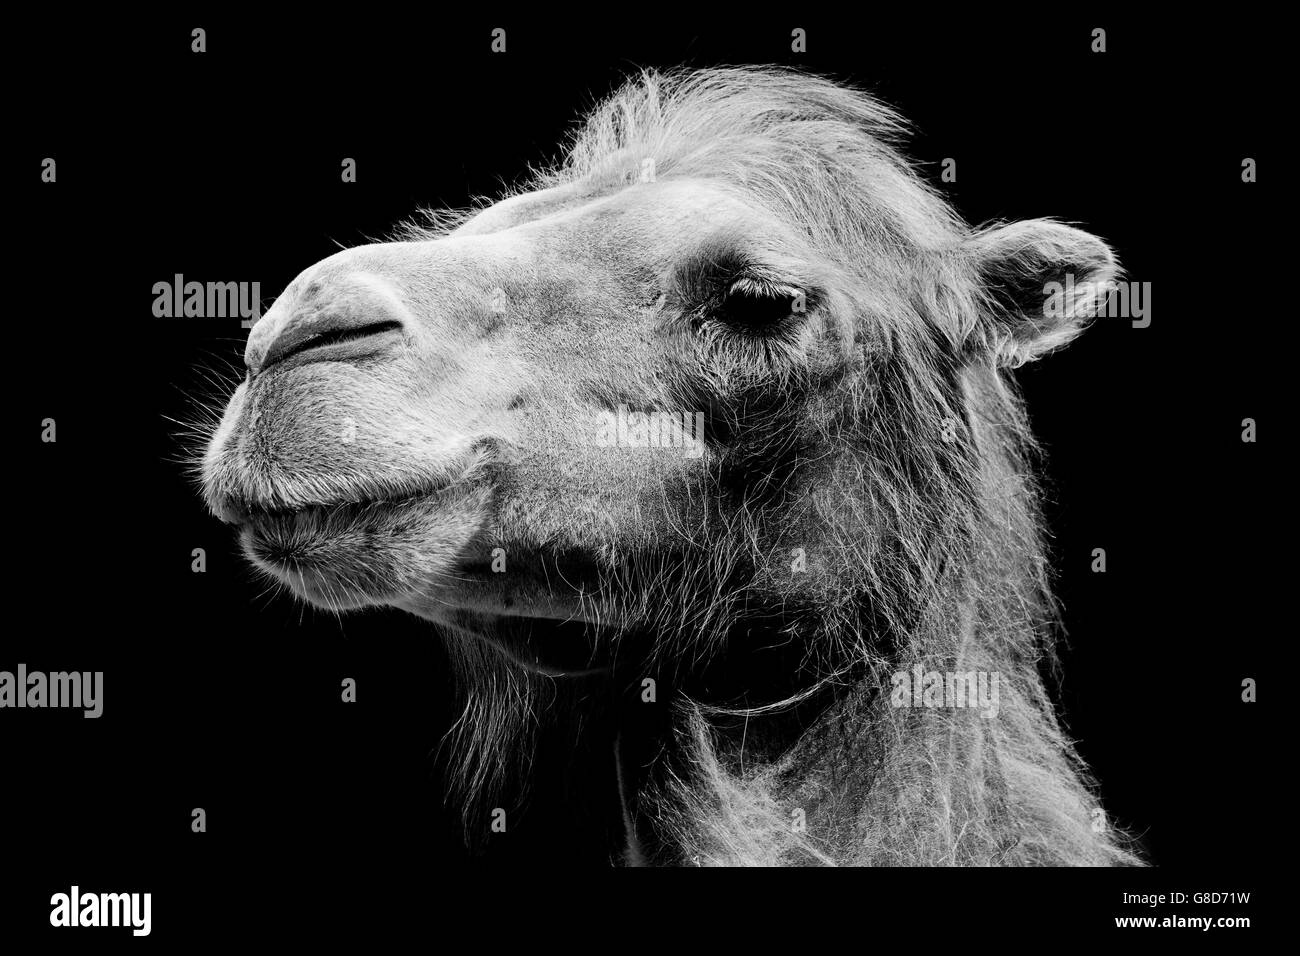 Bactrian camel (Camelus bactrianus) portrait Stock Photo